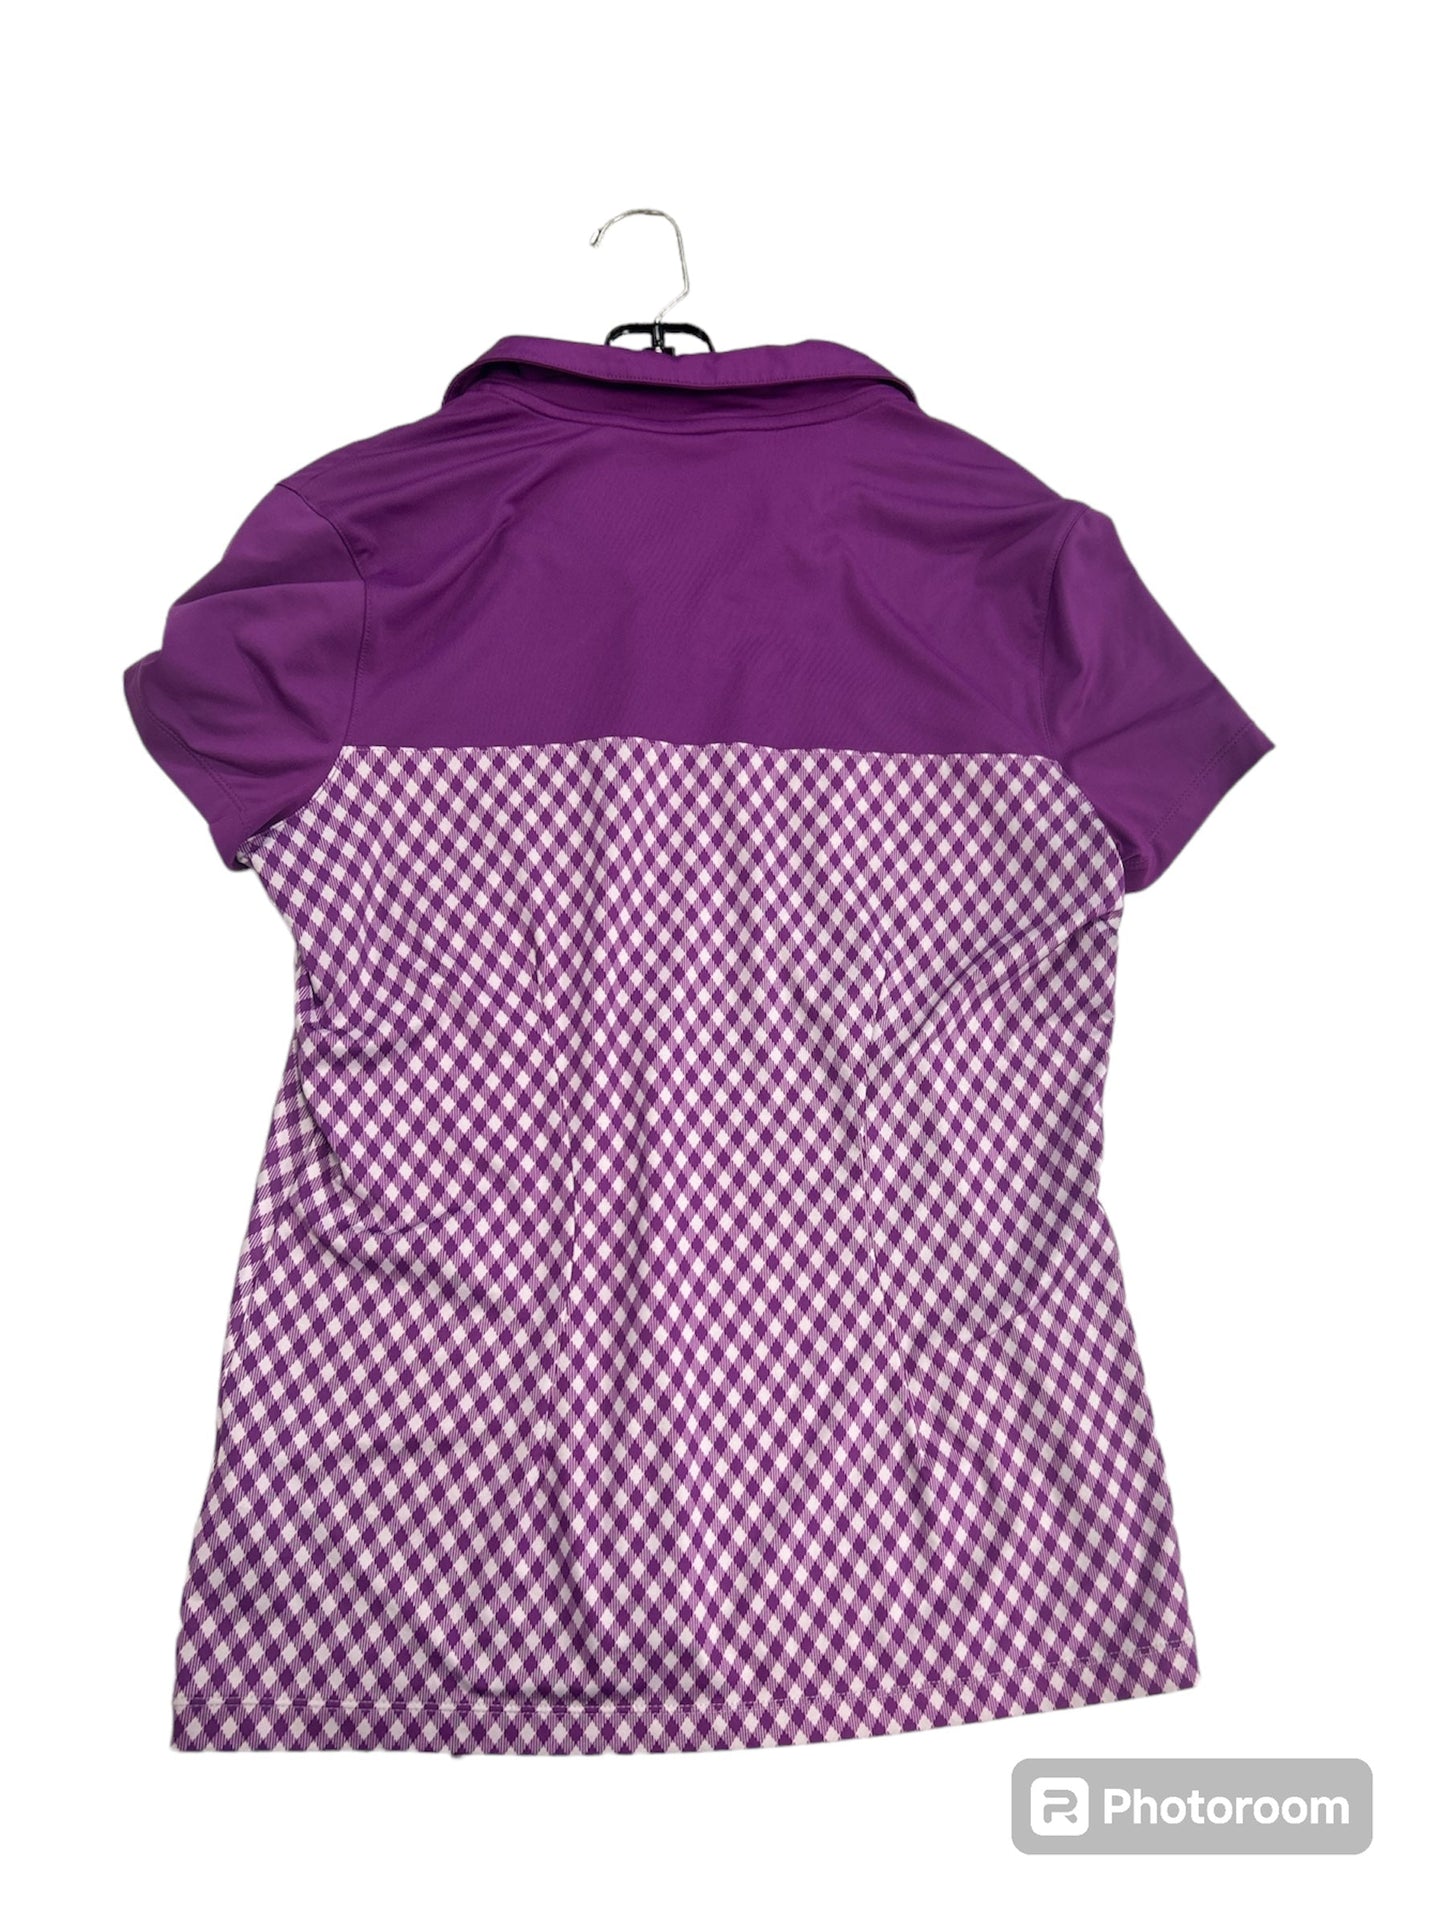 Purple Athletic Top Short Sleeve Nike Apparel, Size M